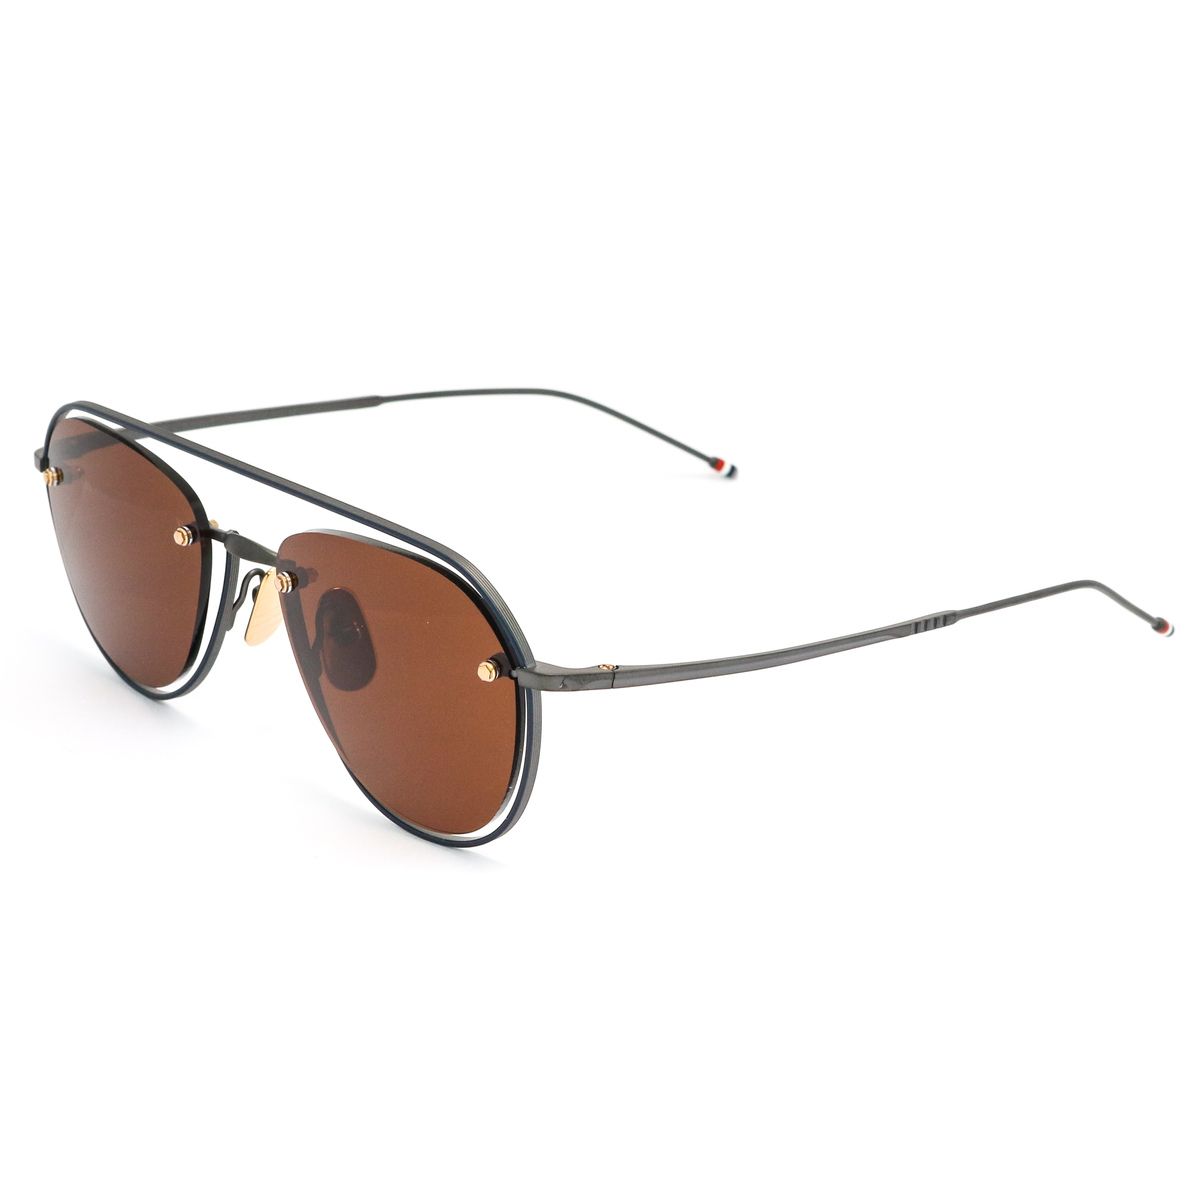 112 Pilot Sunglasses 3 - size 52